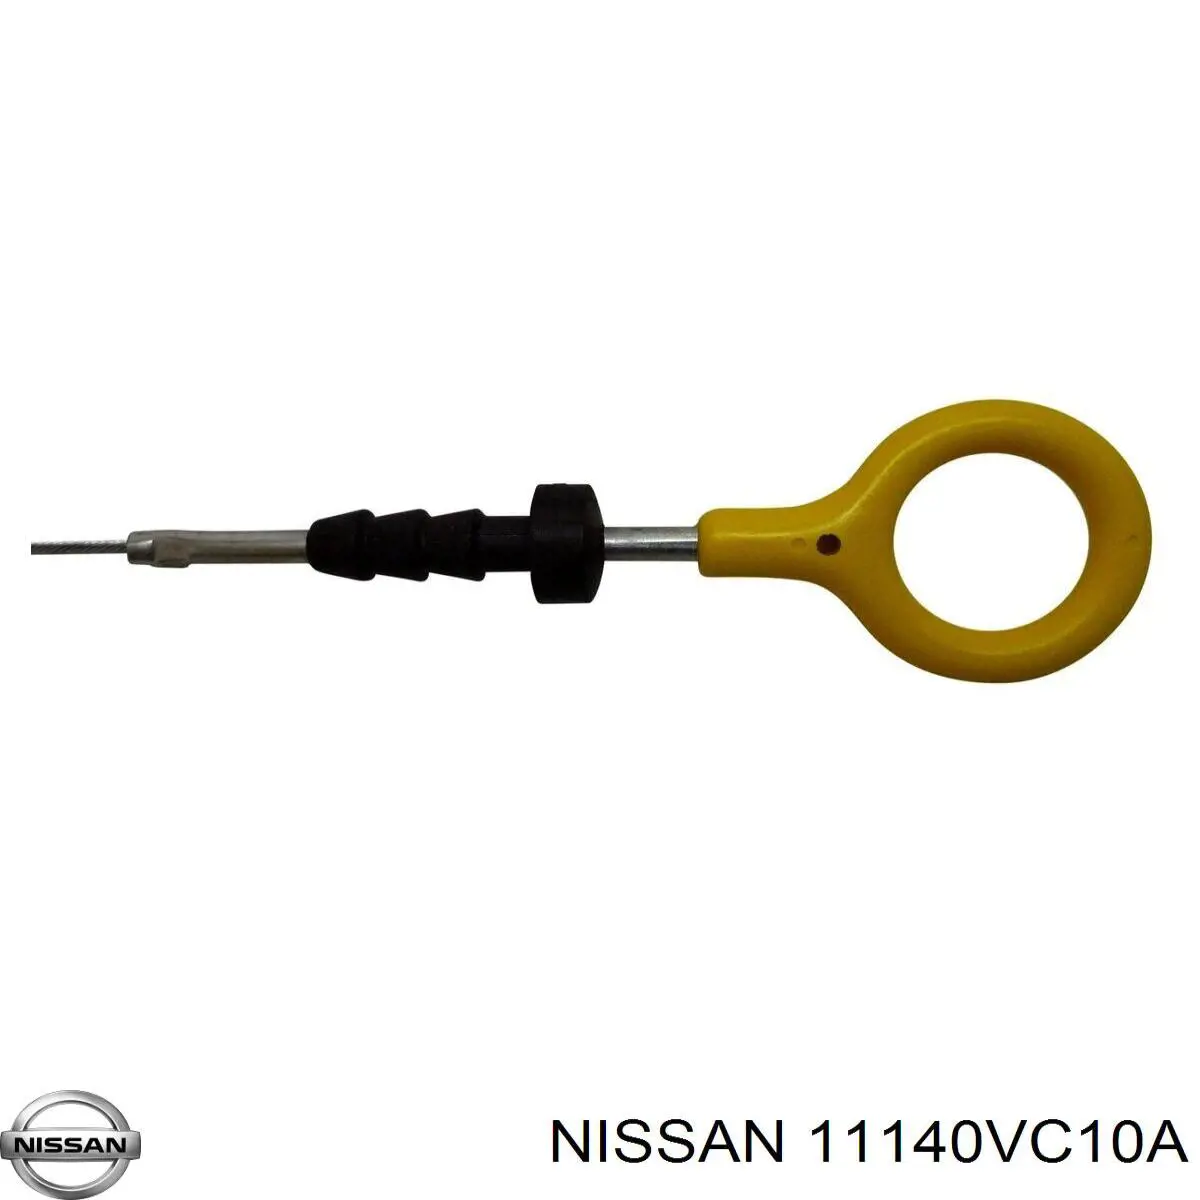 11140VC10A Nissan щуп (индикатор уровня масла в двигателе)